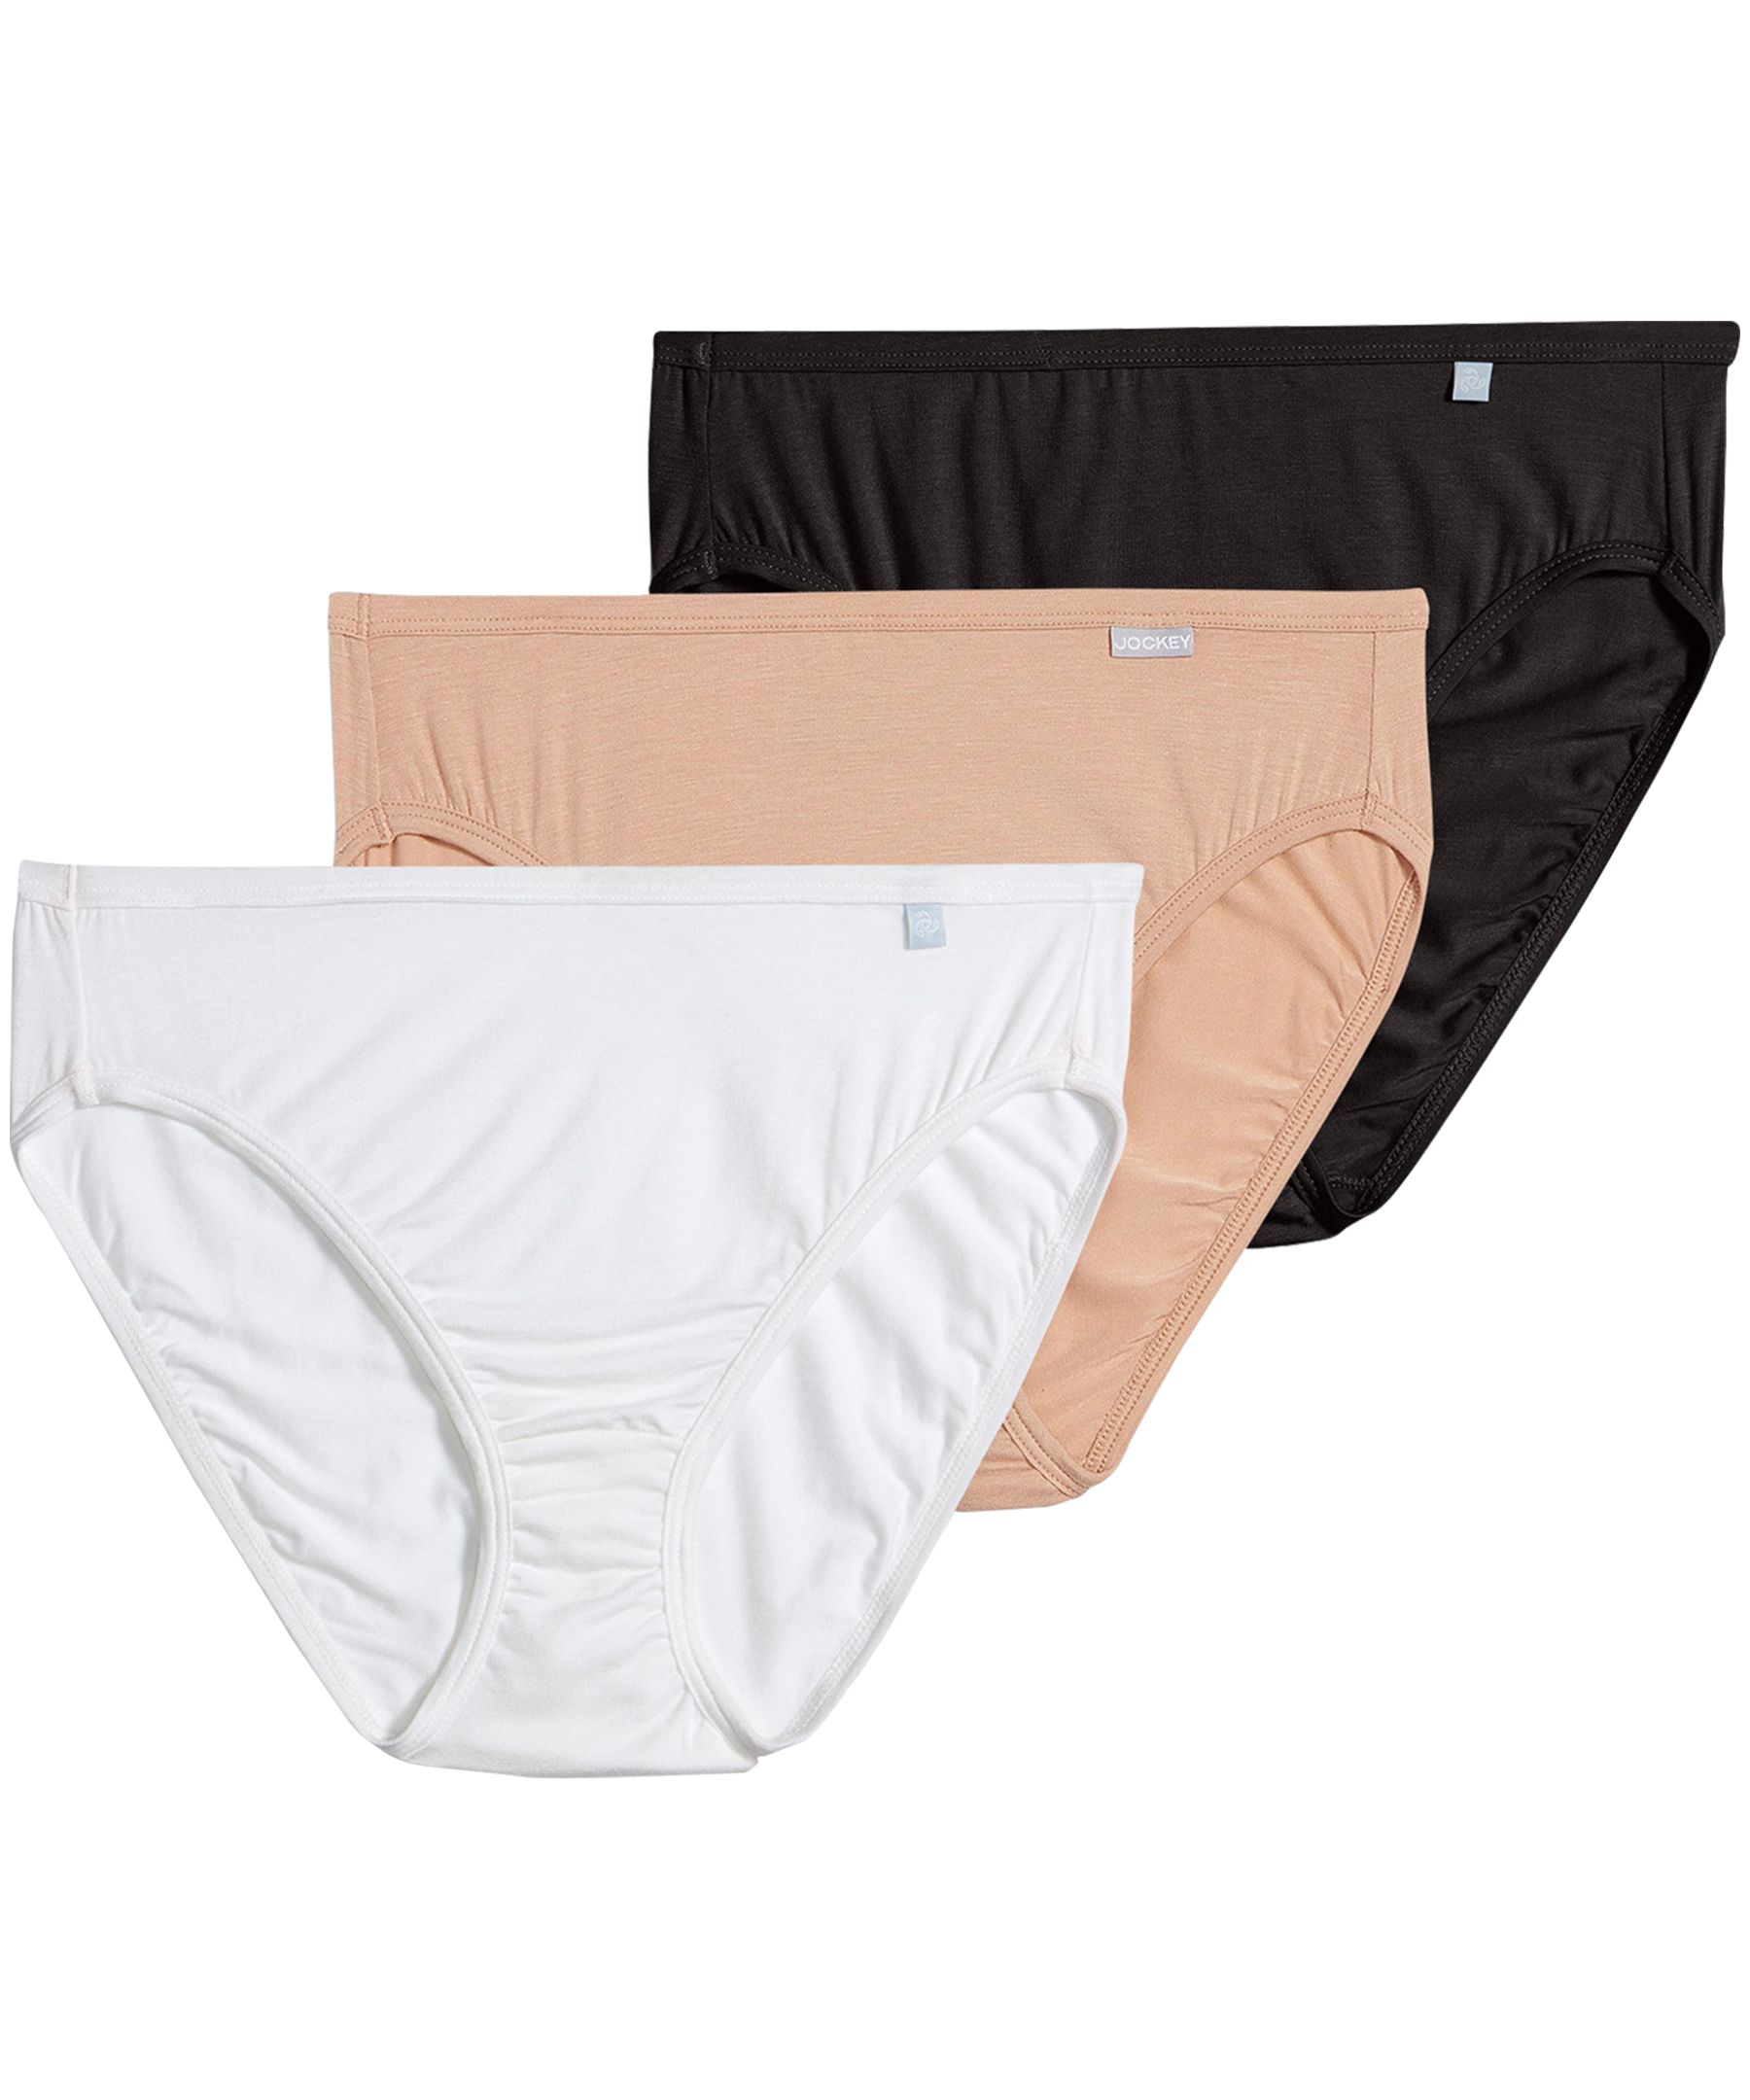 Jockey Women's Underwear Classic Brief - 3 Pack, Ivory, 5 at  Women's  Clothing store